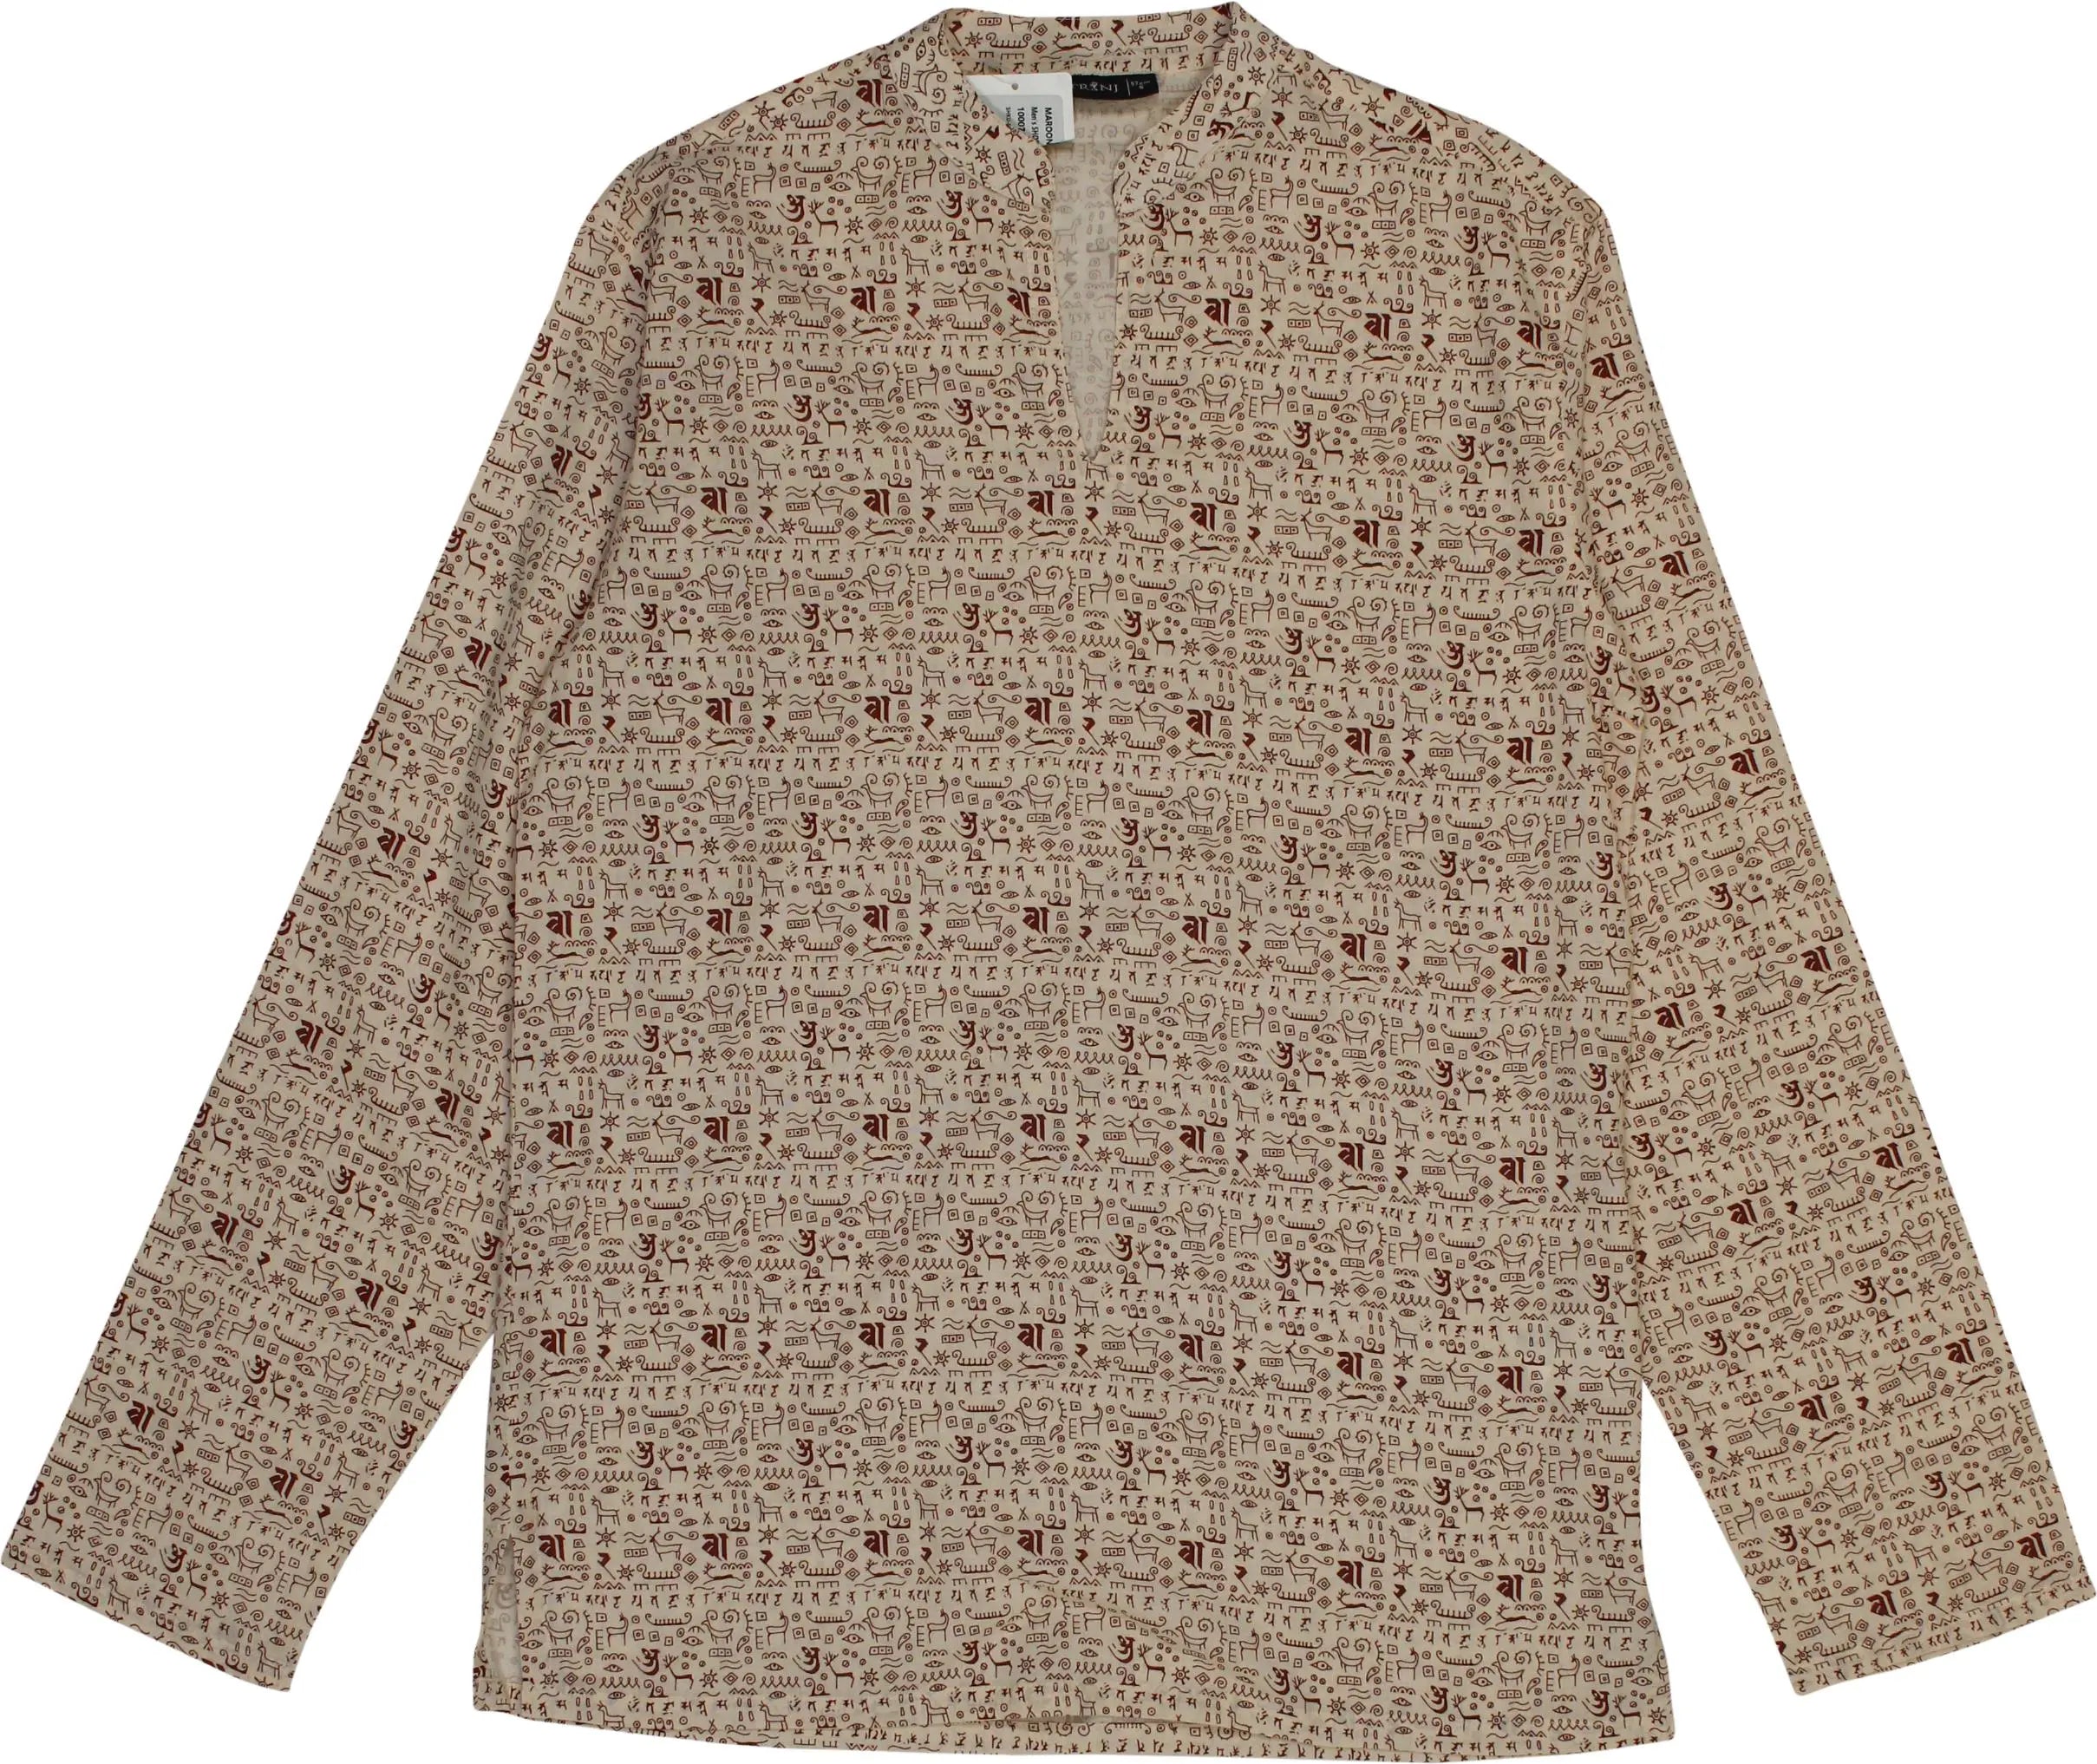 Shatranj - Patterned Kurta Shirt- ThriftTale.com - Vintage and second handclothing